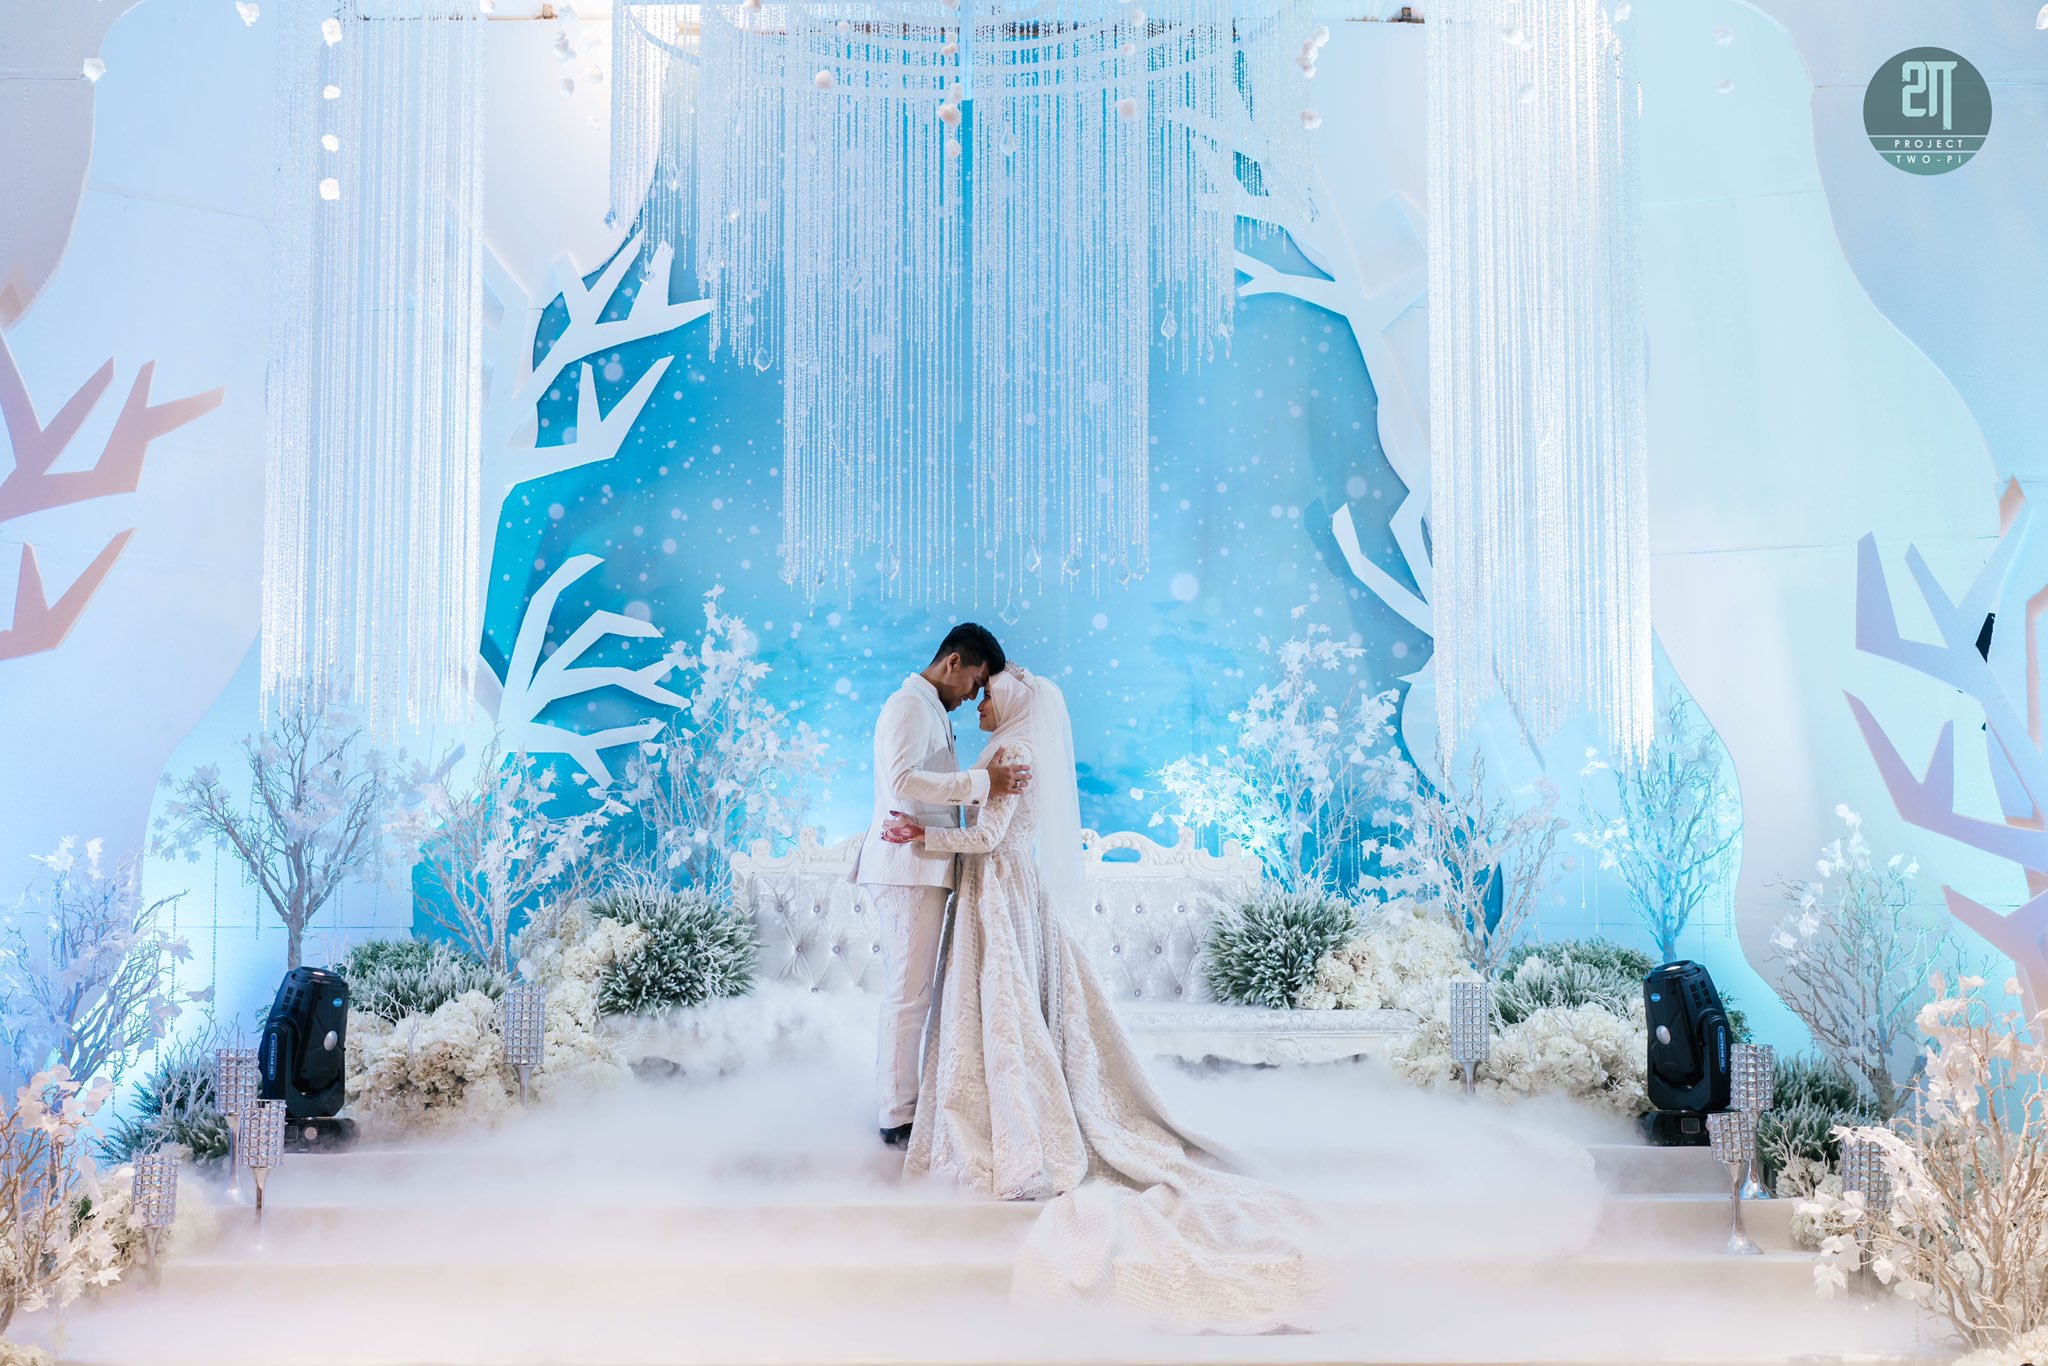 [VIDEO] Abang Tak Hadir Wedding, Eyra Hazali Terus Nangis Bila Ada Kejutan Lain